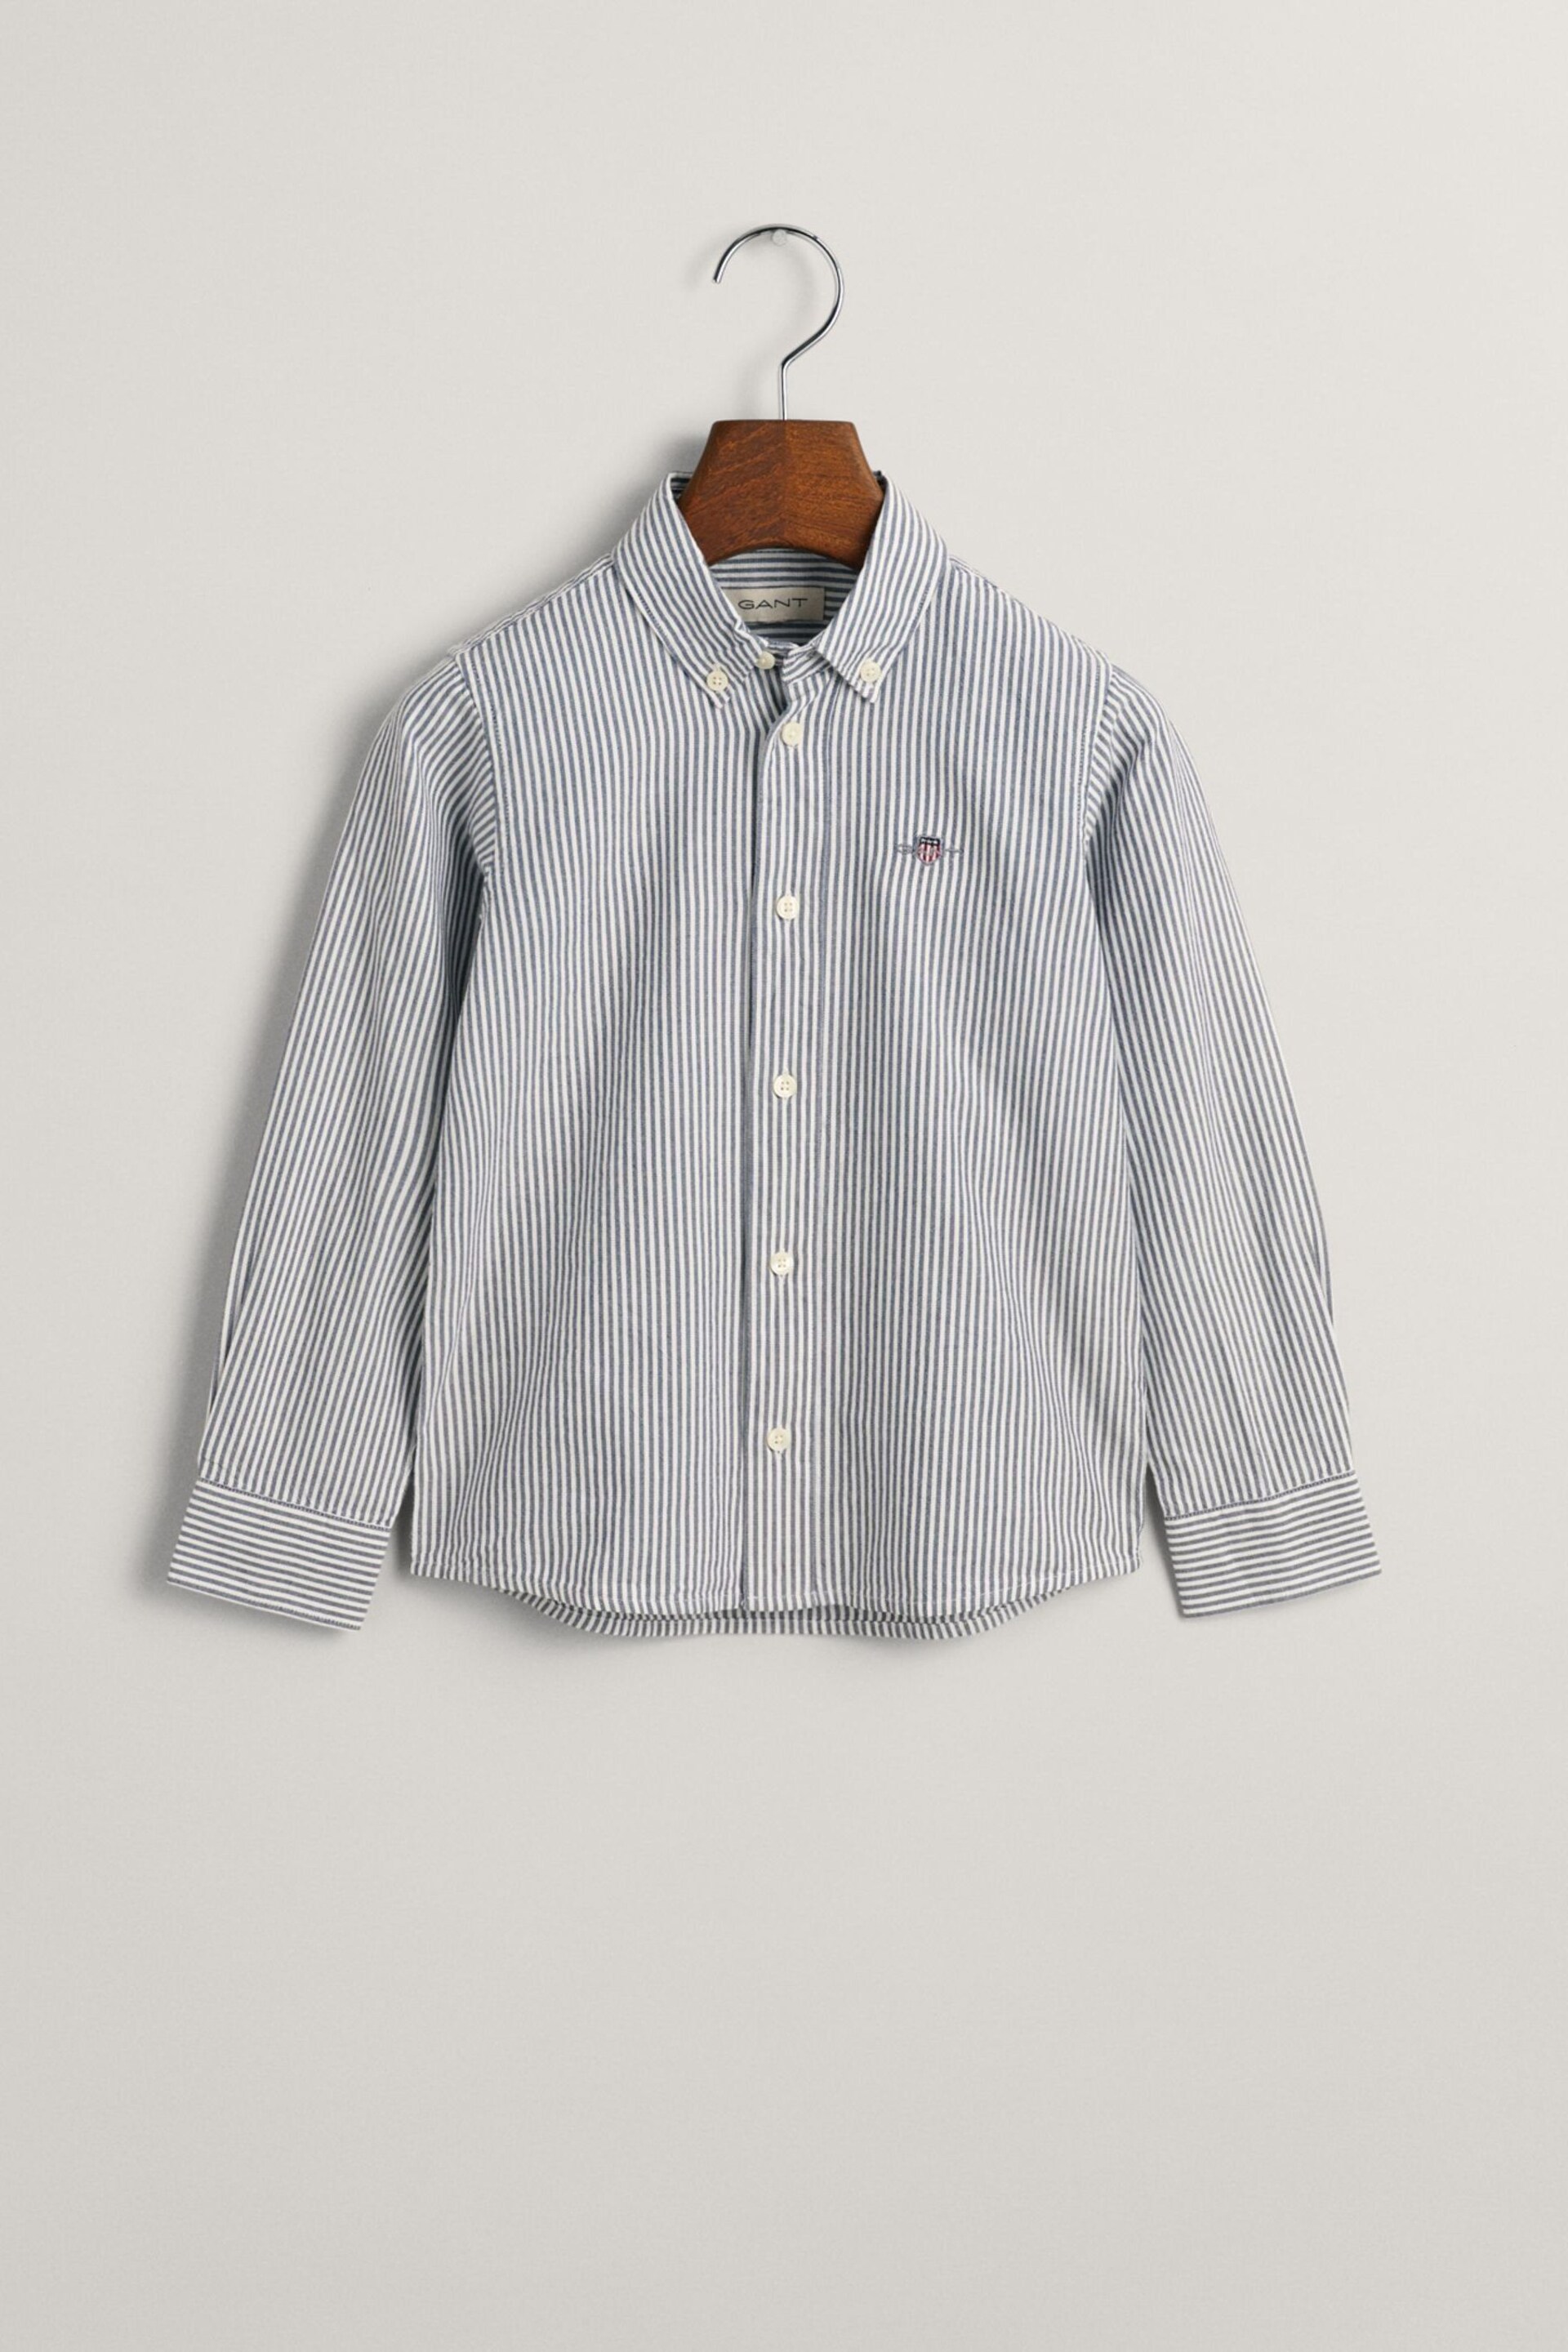 GANT Kids Shield Striped Oxford Shirt - Image 8 of 8